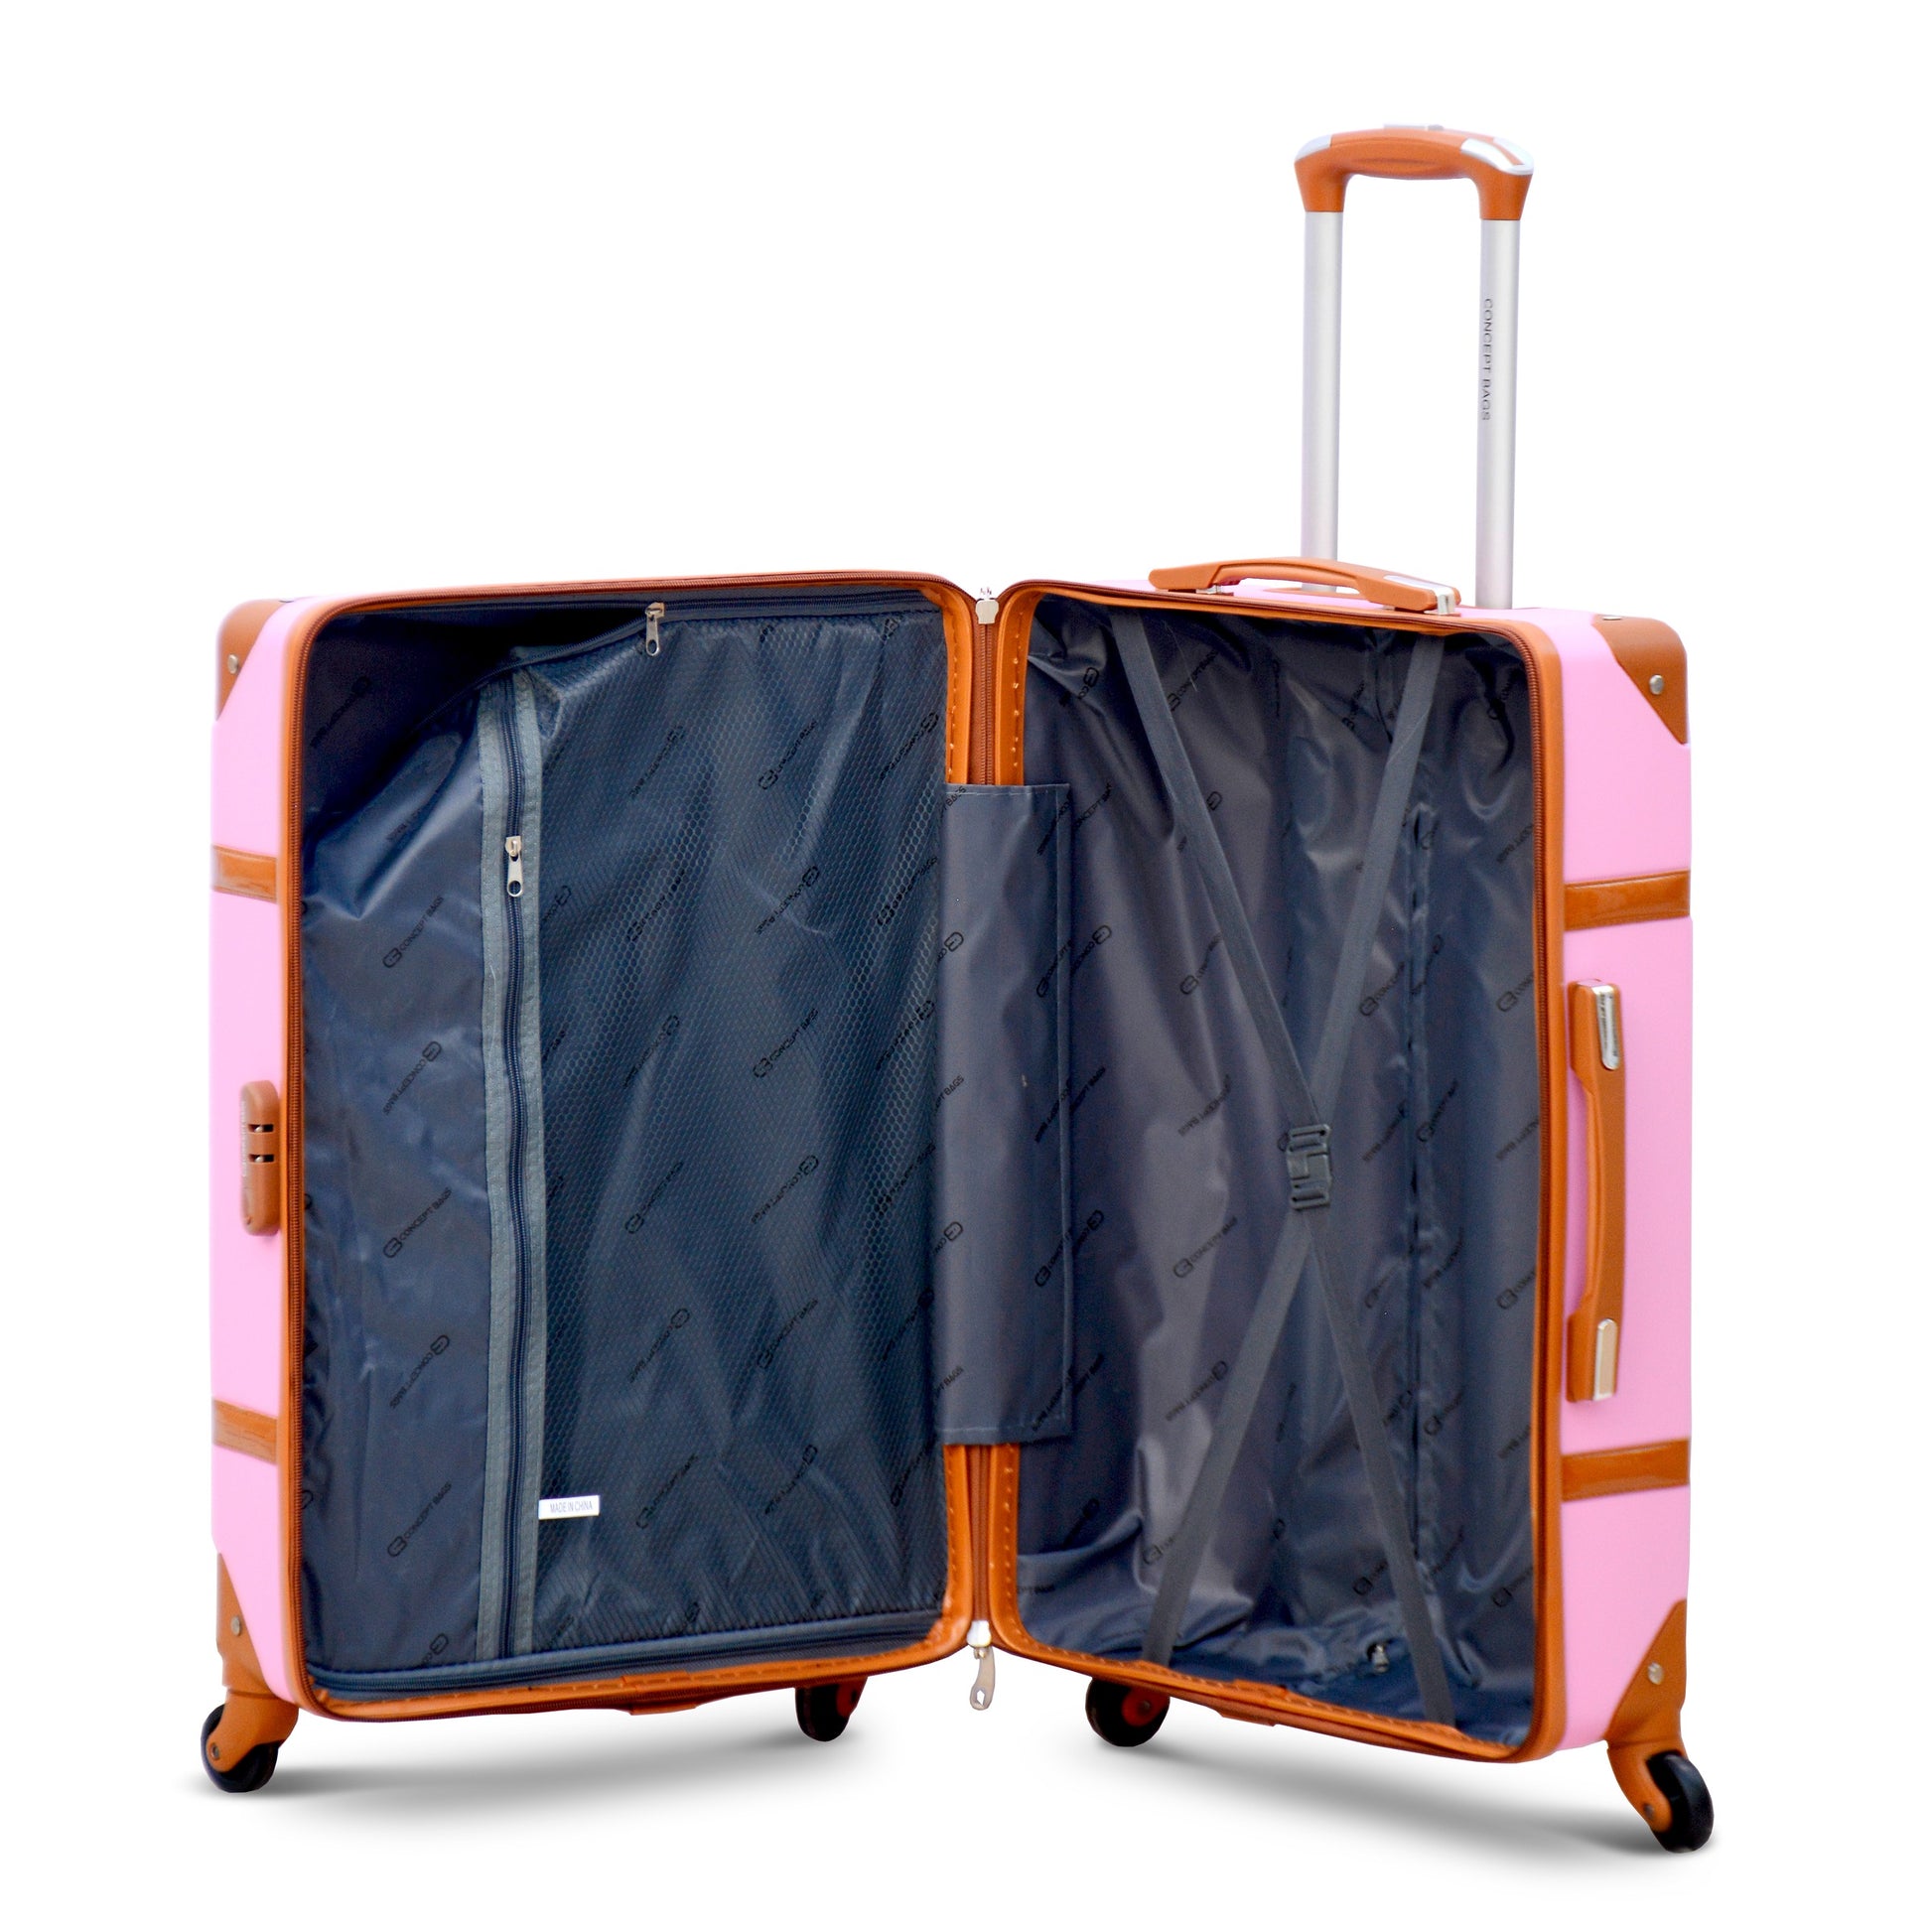 Corner guard lightweight full set low price pink colour luggage interior